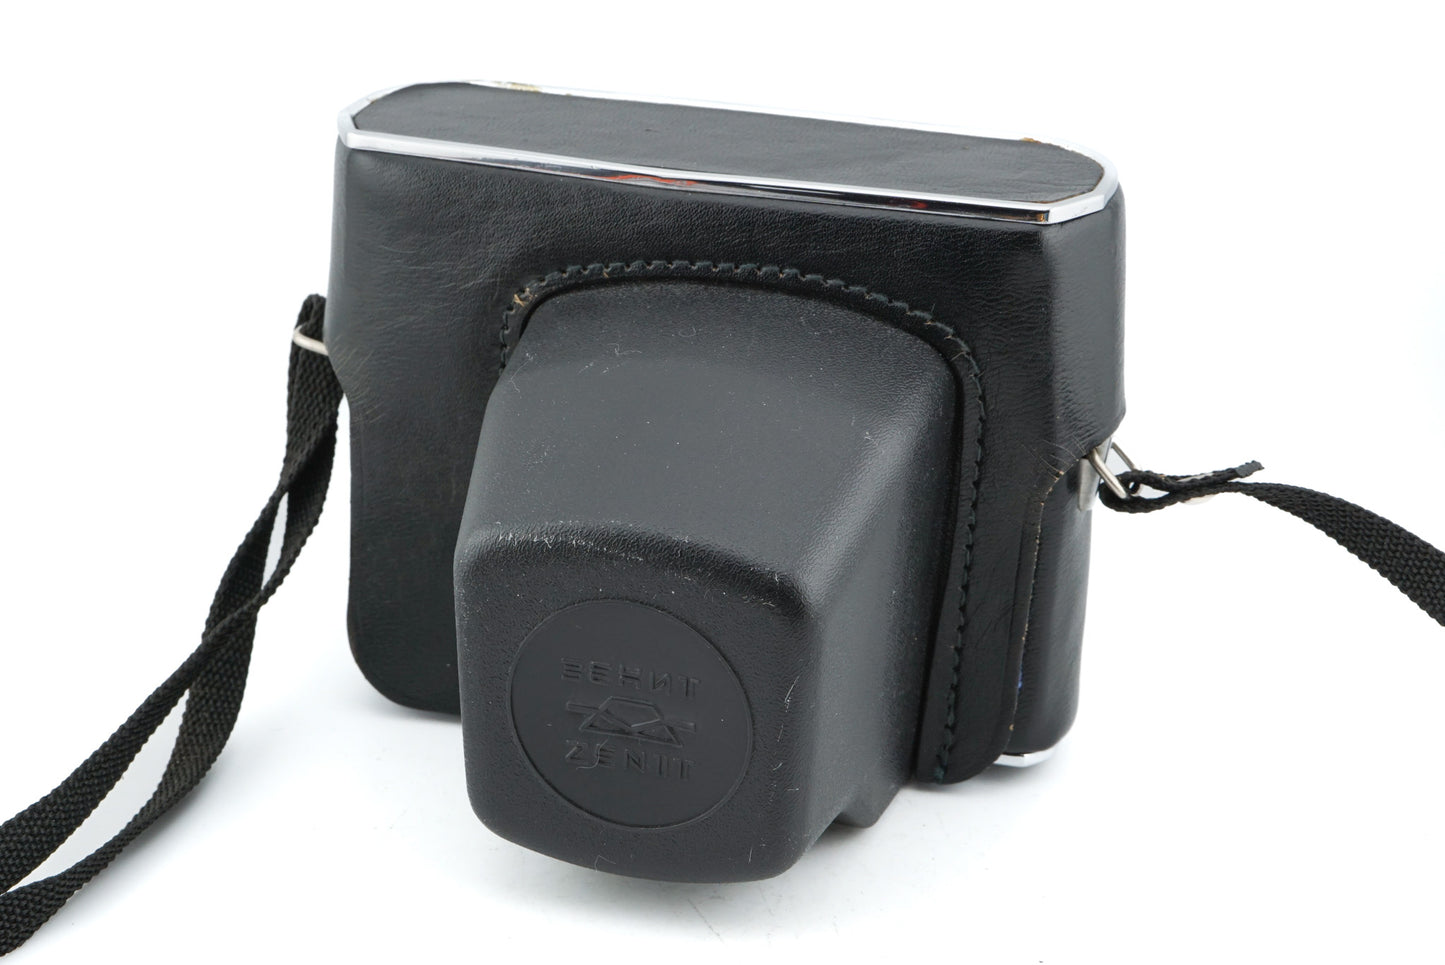 Zenit Camera Case - Accessory